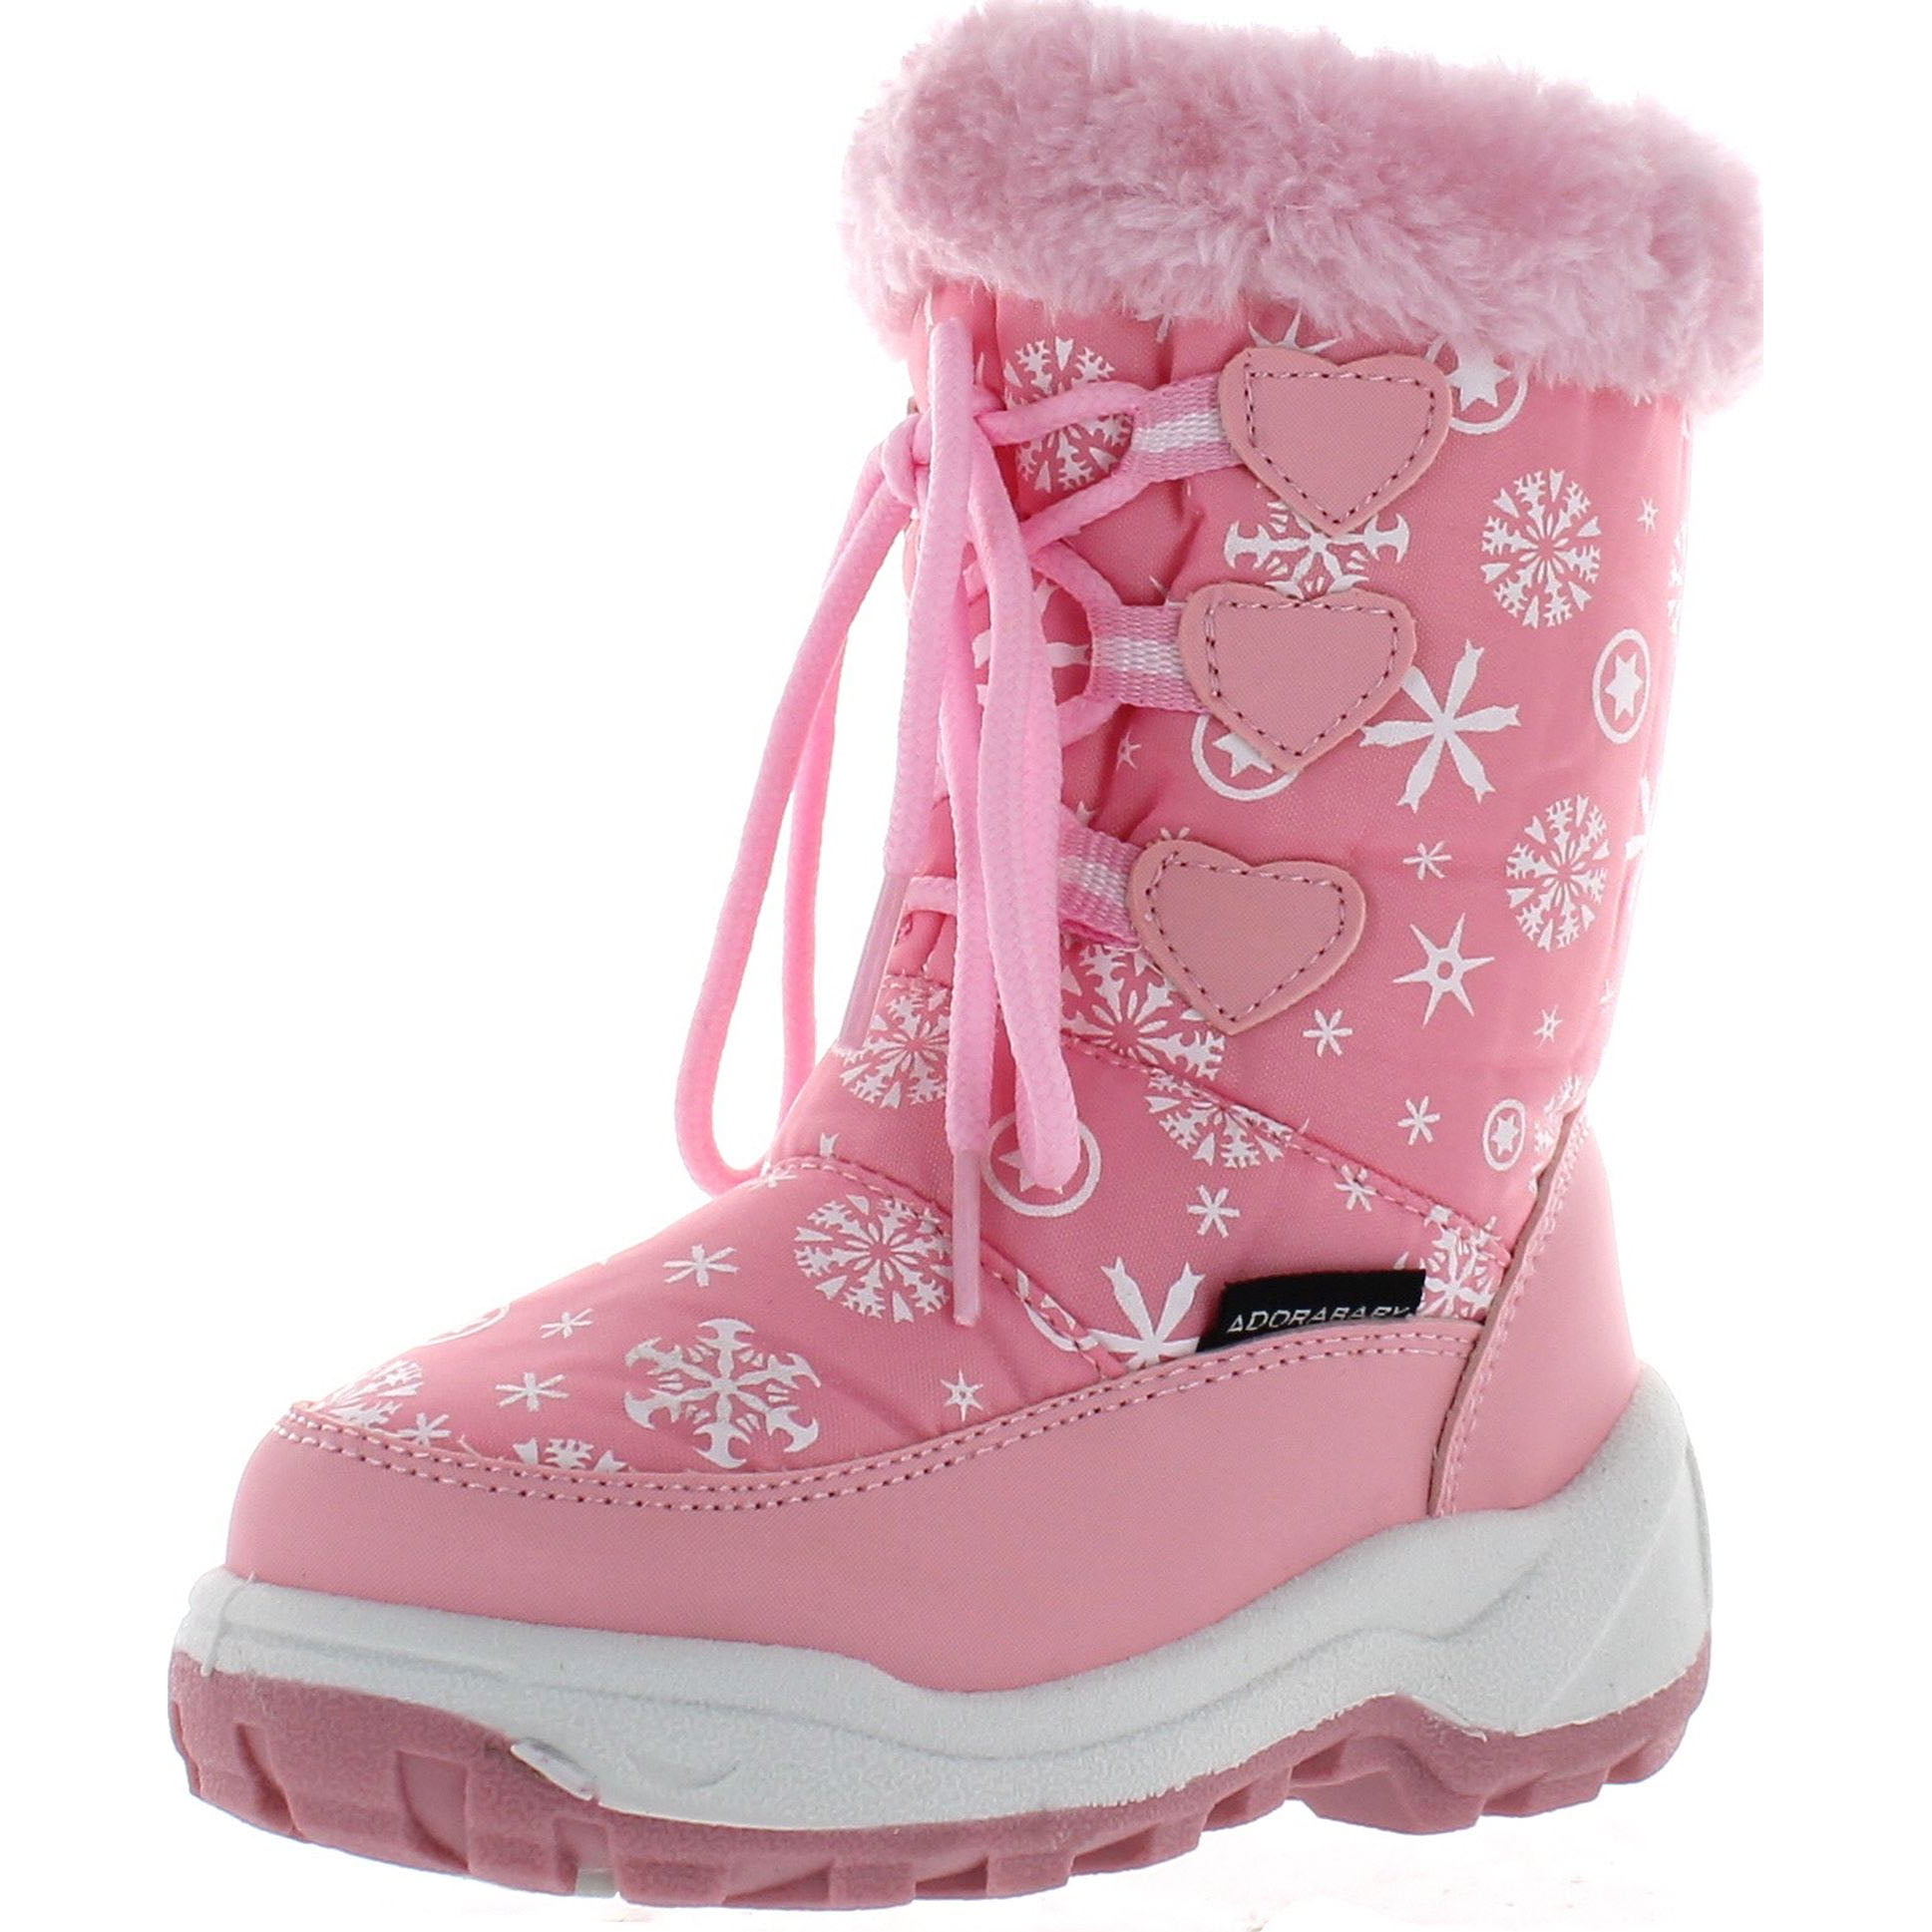 Nova Toddler Boy's and Girl's Winter Snow Boots 